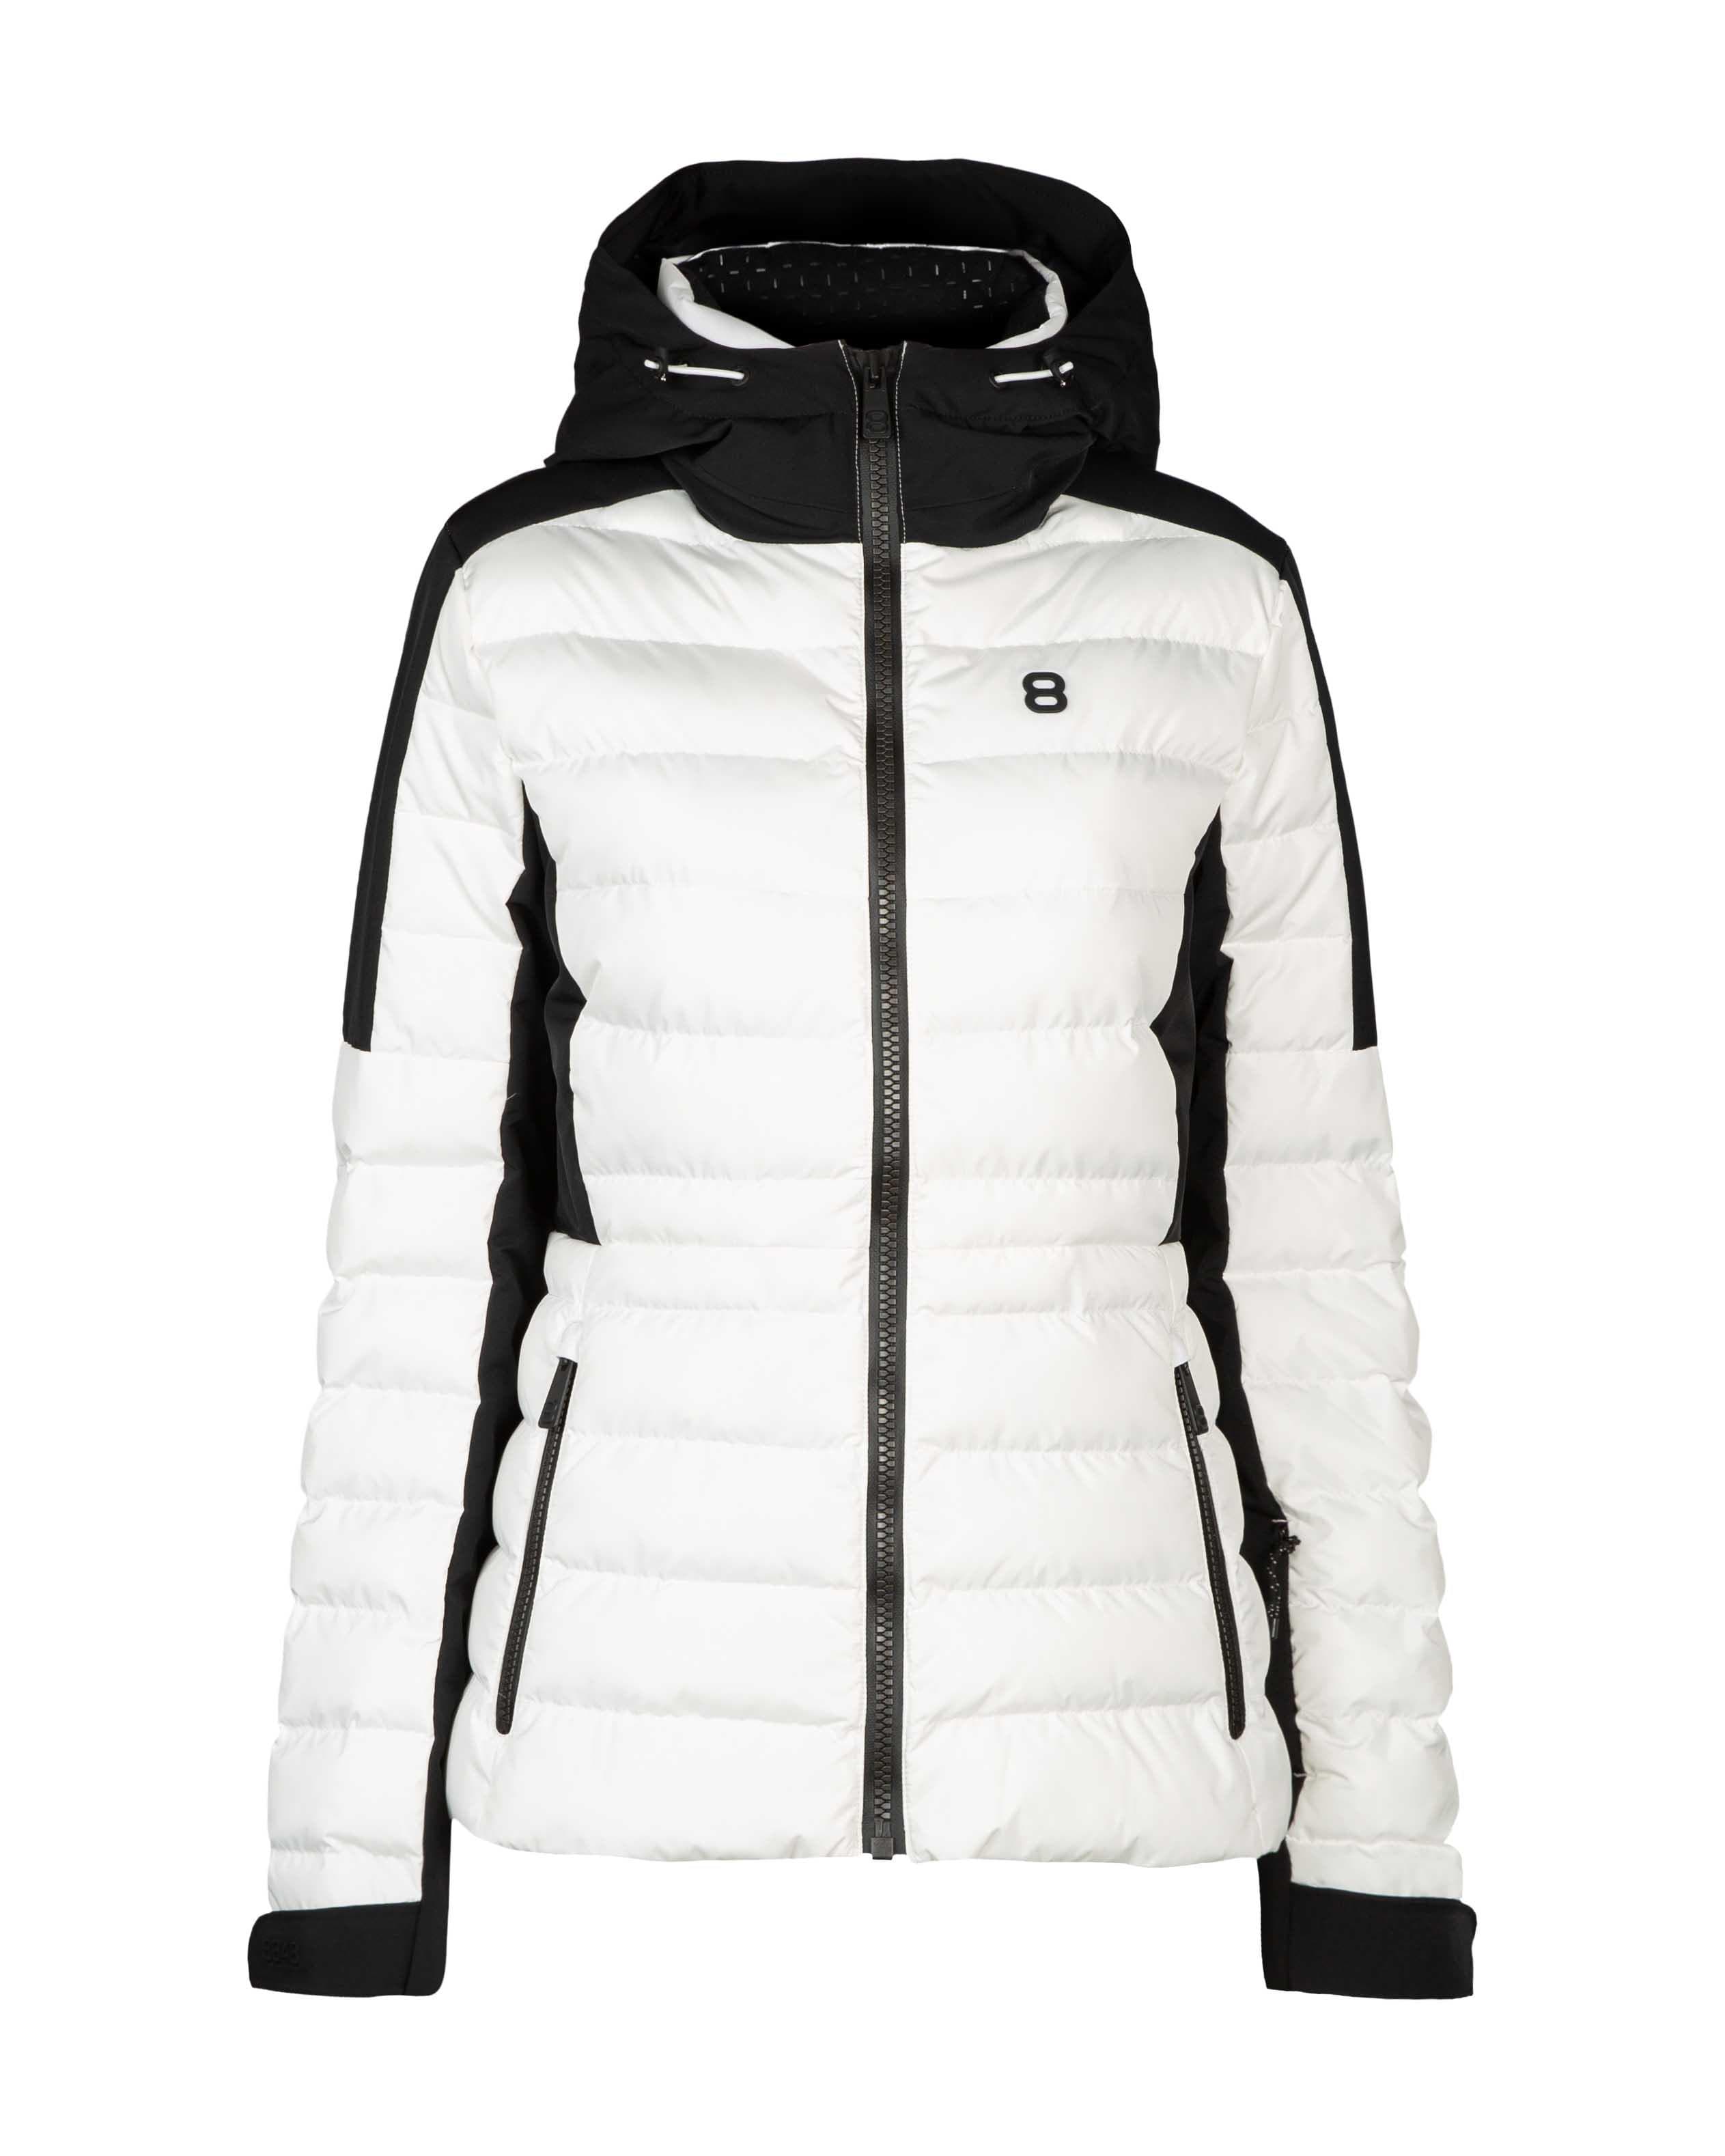 Anoesjka W Jacket Blanc - White ski jacket women